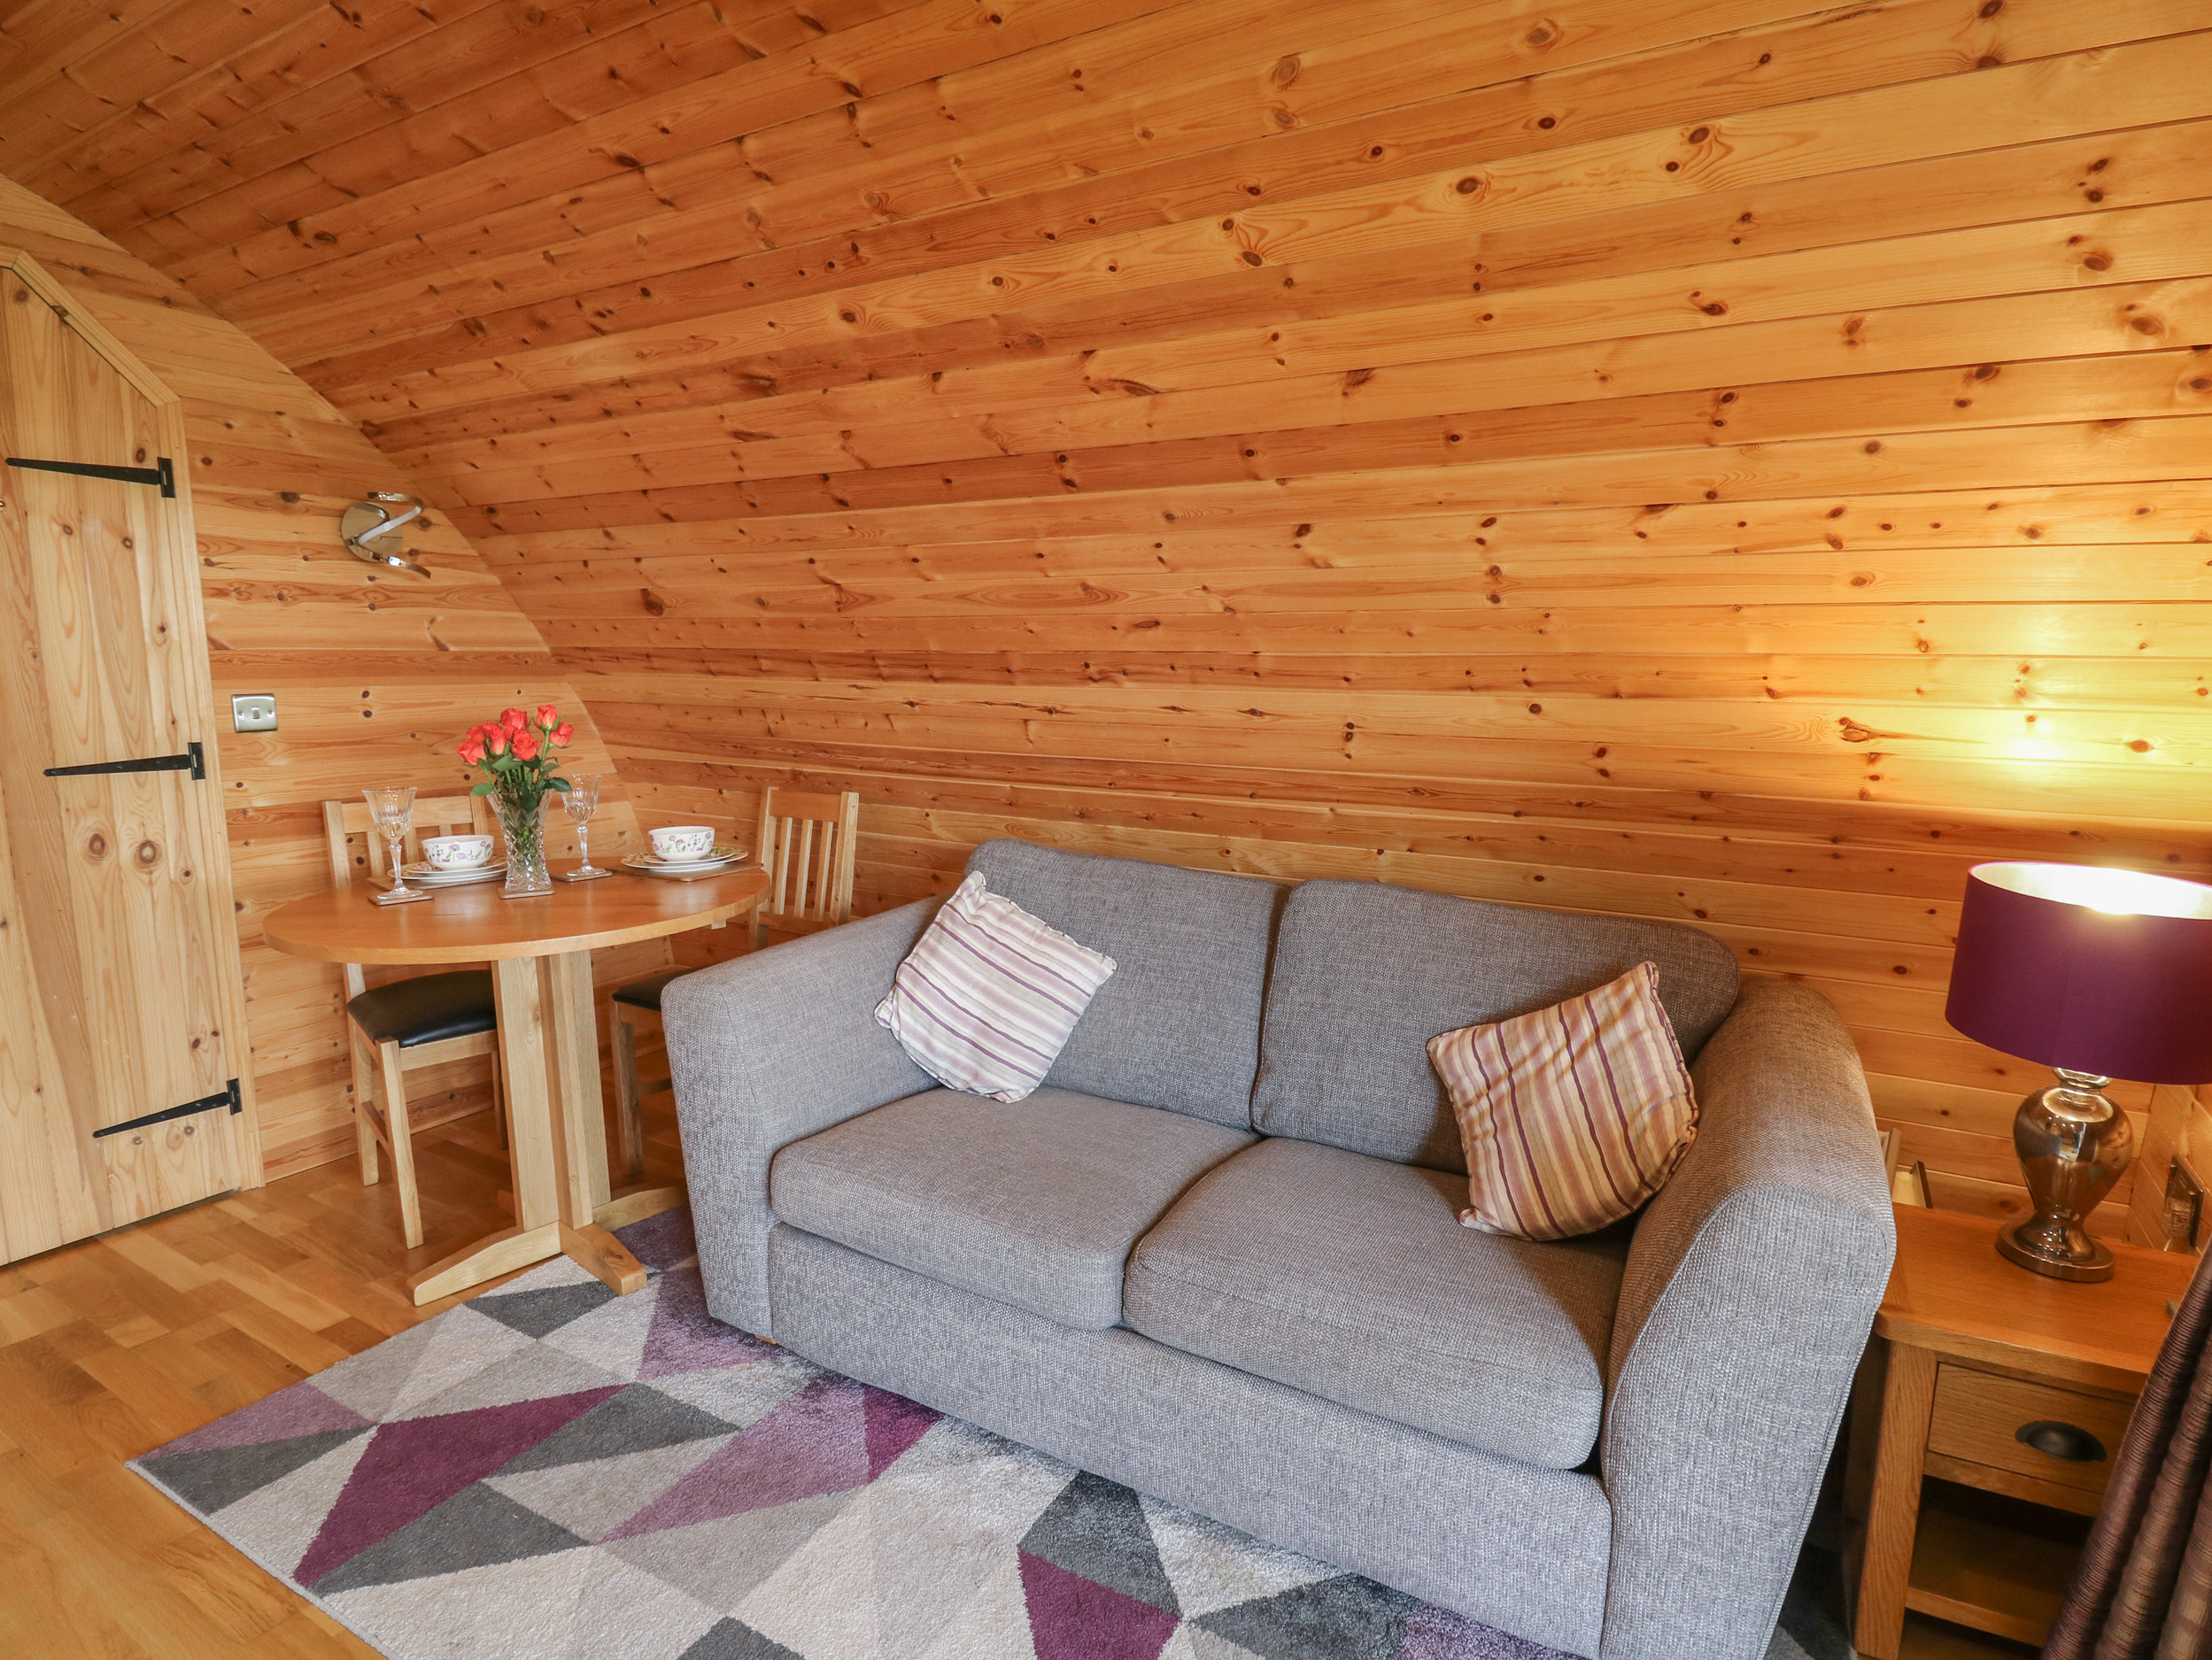 Pine Lodge, Llanddessant near Llandovery, Mid Wales, dog-free, hot tub, romantic, couples, 1bedroom.